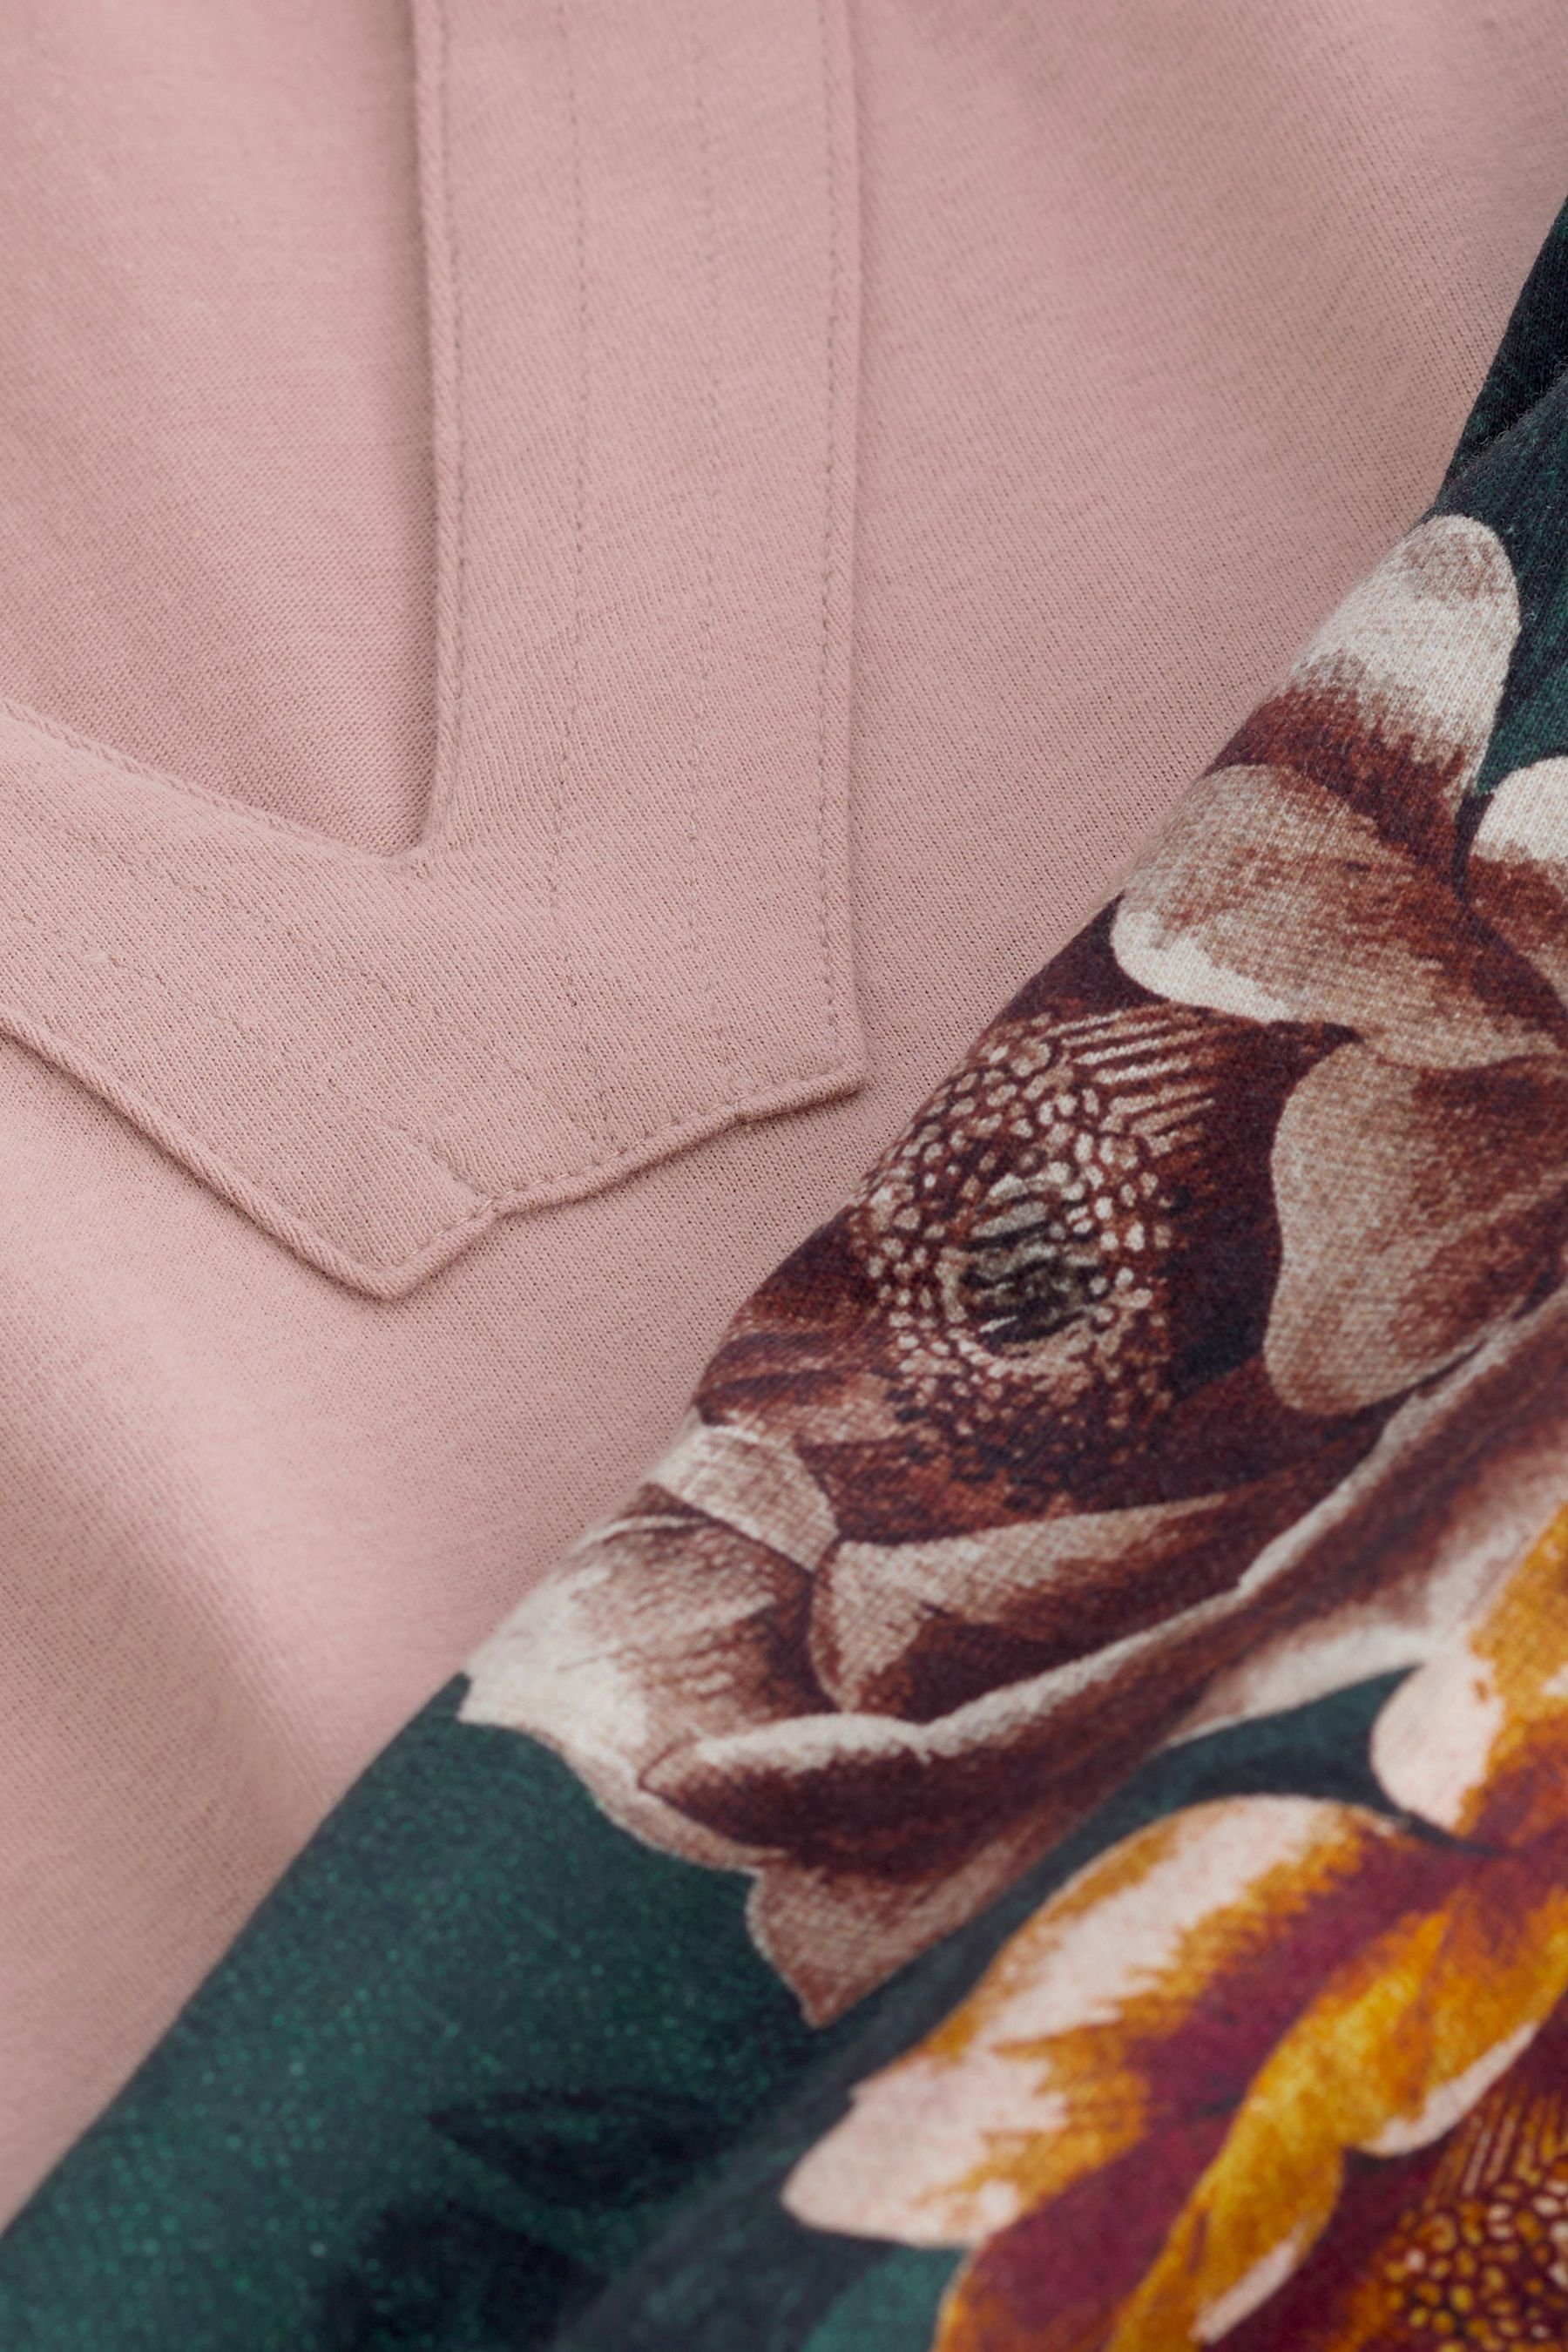 Next Pyjama Floral tlg) (2 aus Pyjama Baumwolle Pink/Green